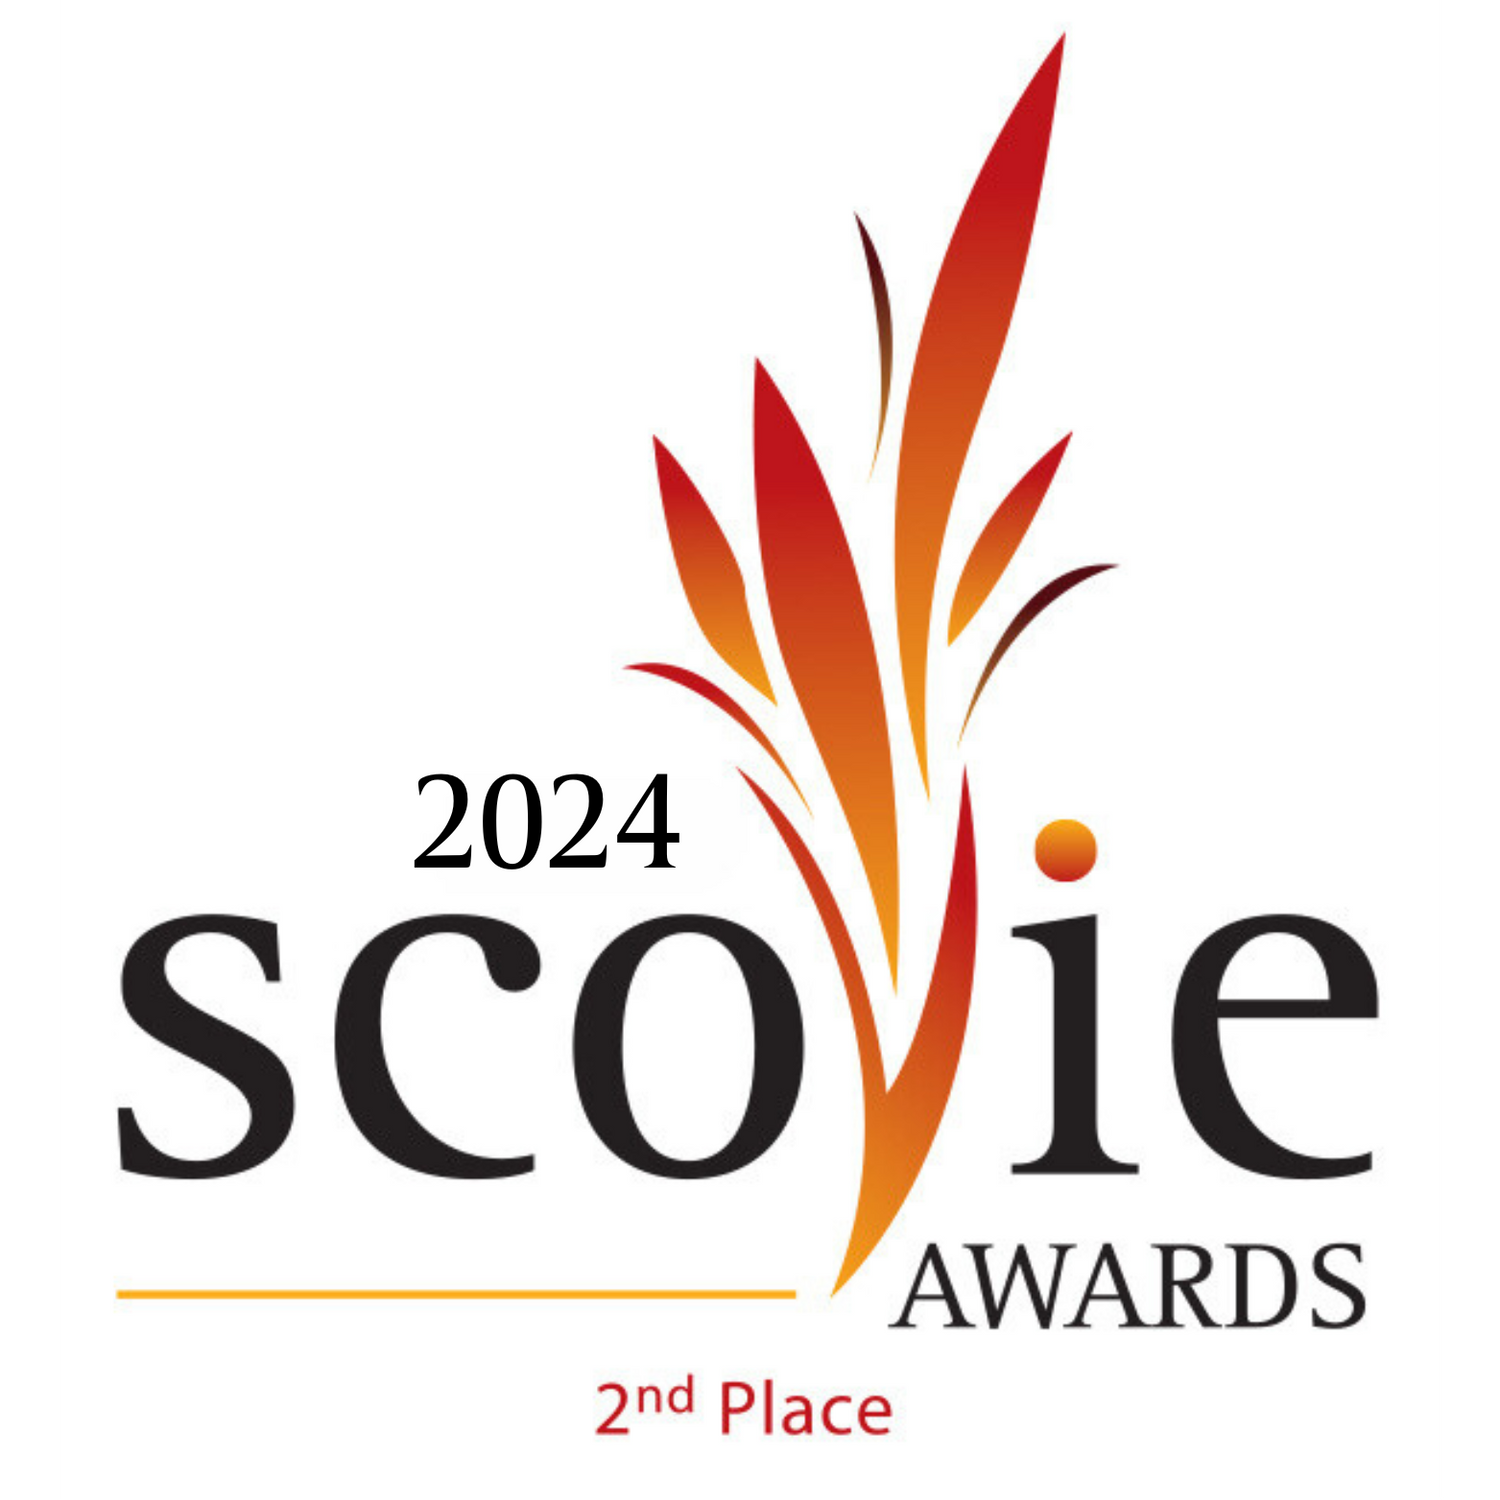 2nd Place Scovie Award Winning Taco Seasoning 